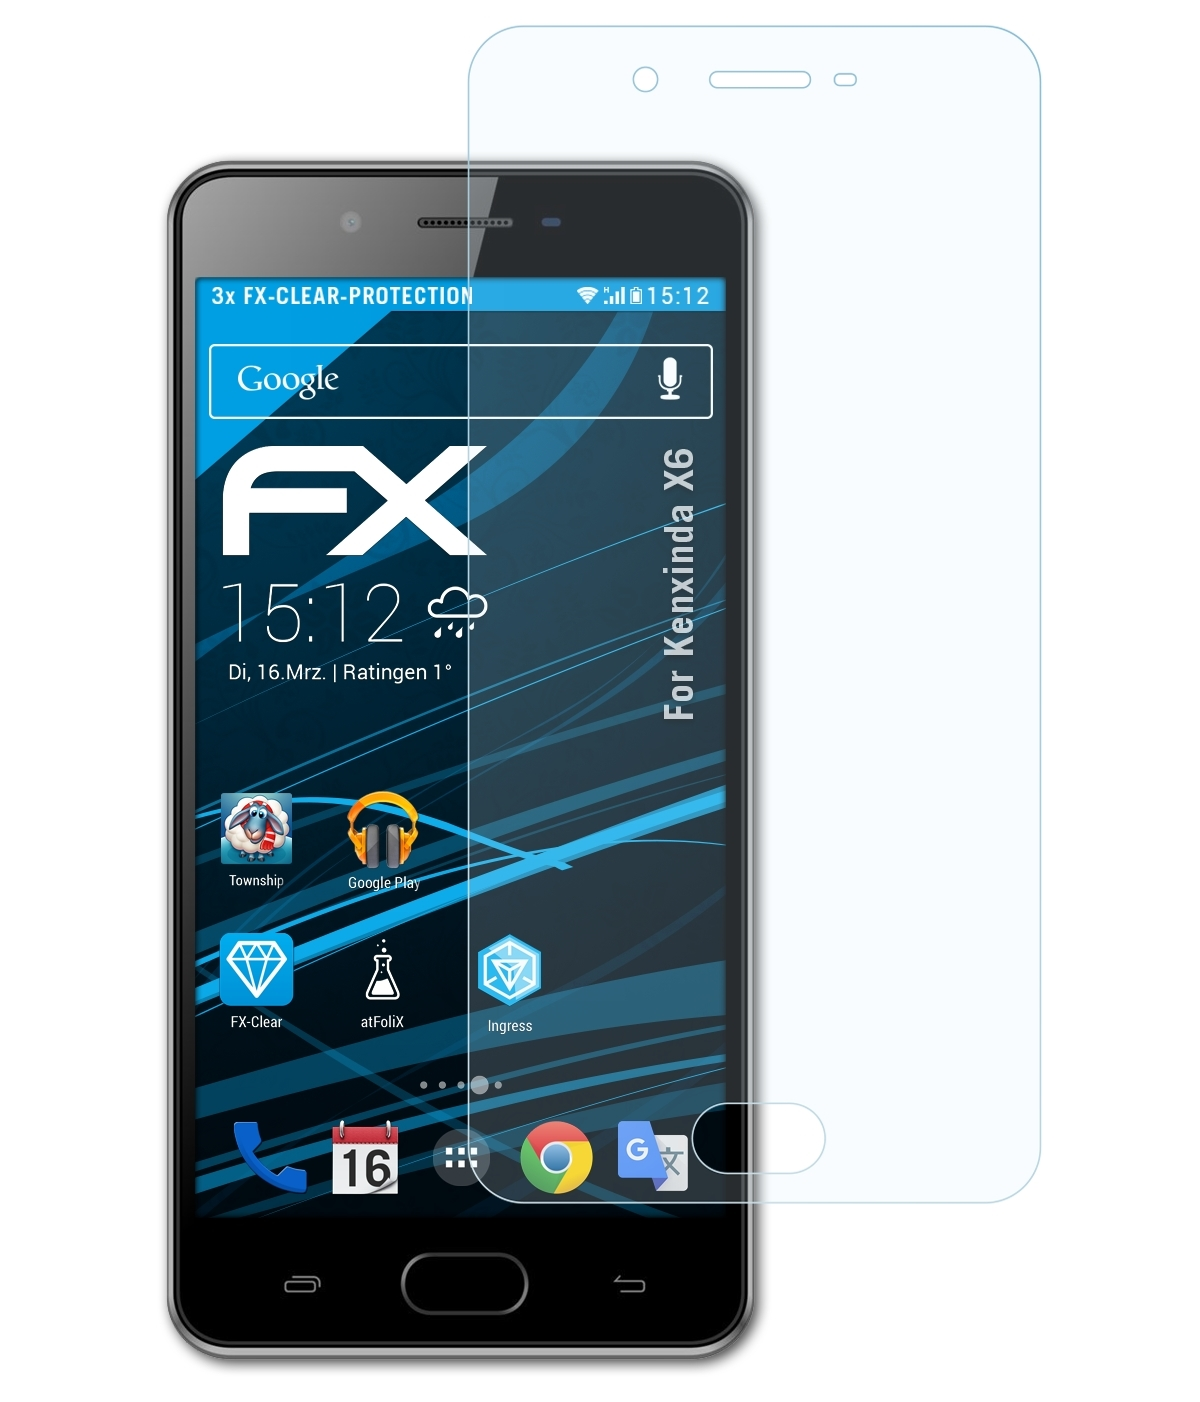 Kenxinda 3x X6) ATFOLIX FX-Clear Displayschutz(für